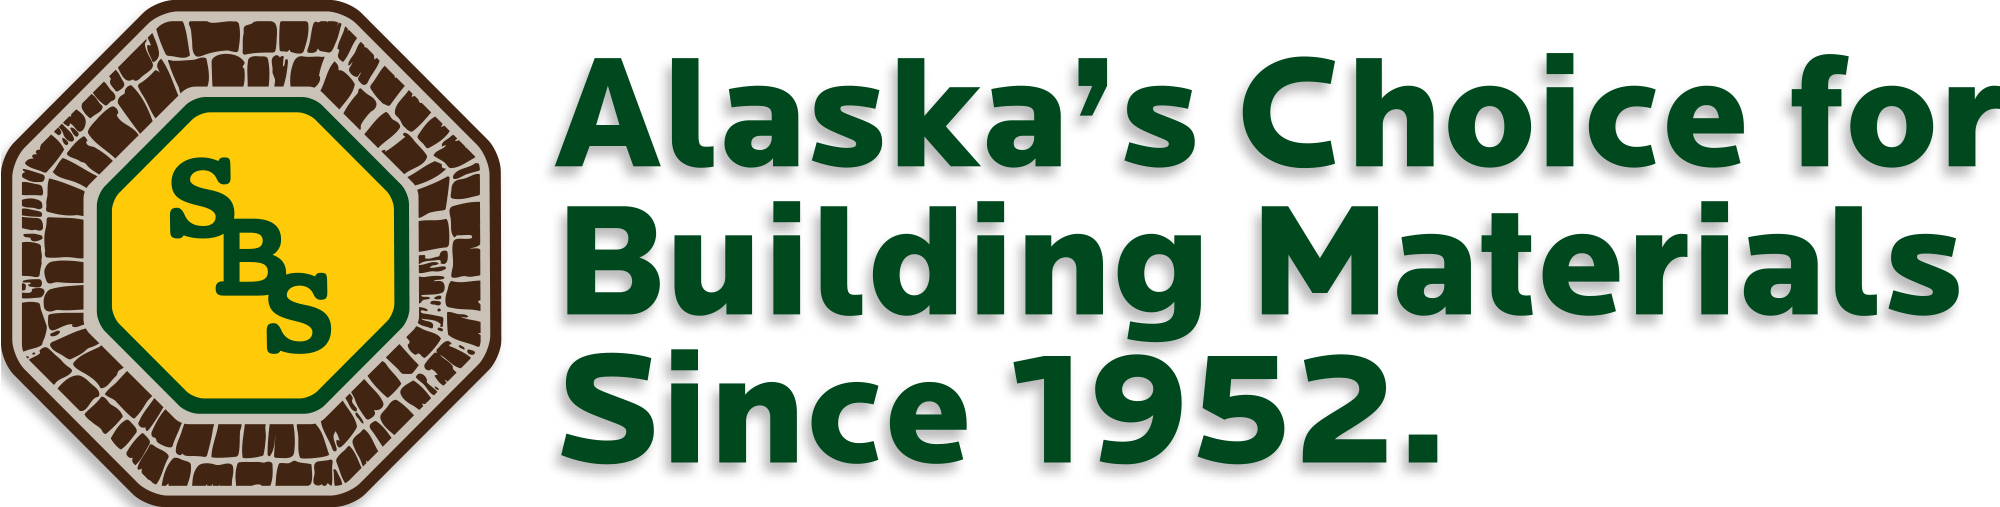 Alaska’s Choice for Building Materials Since 1952.